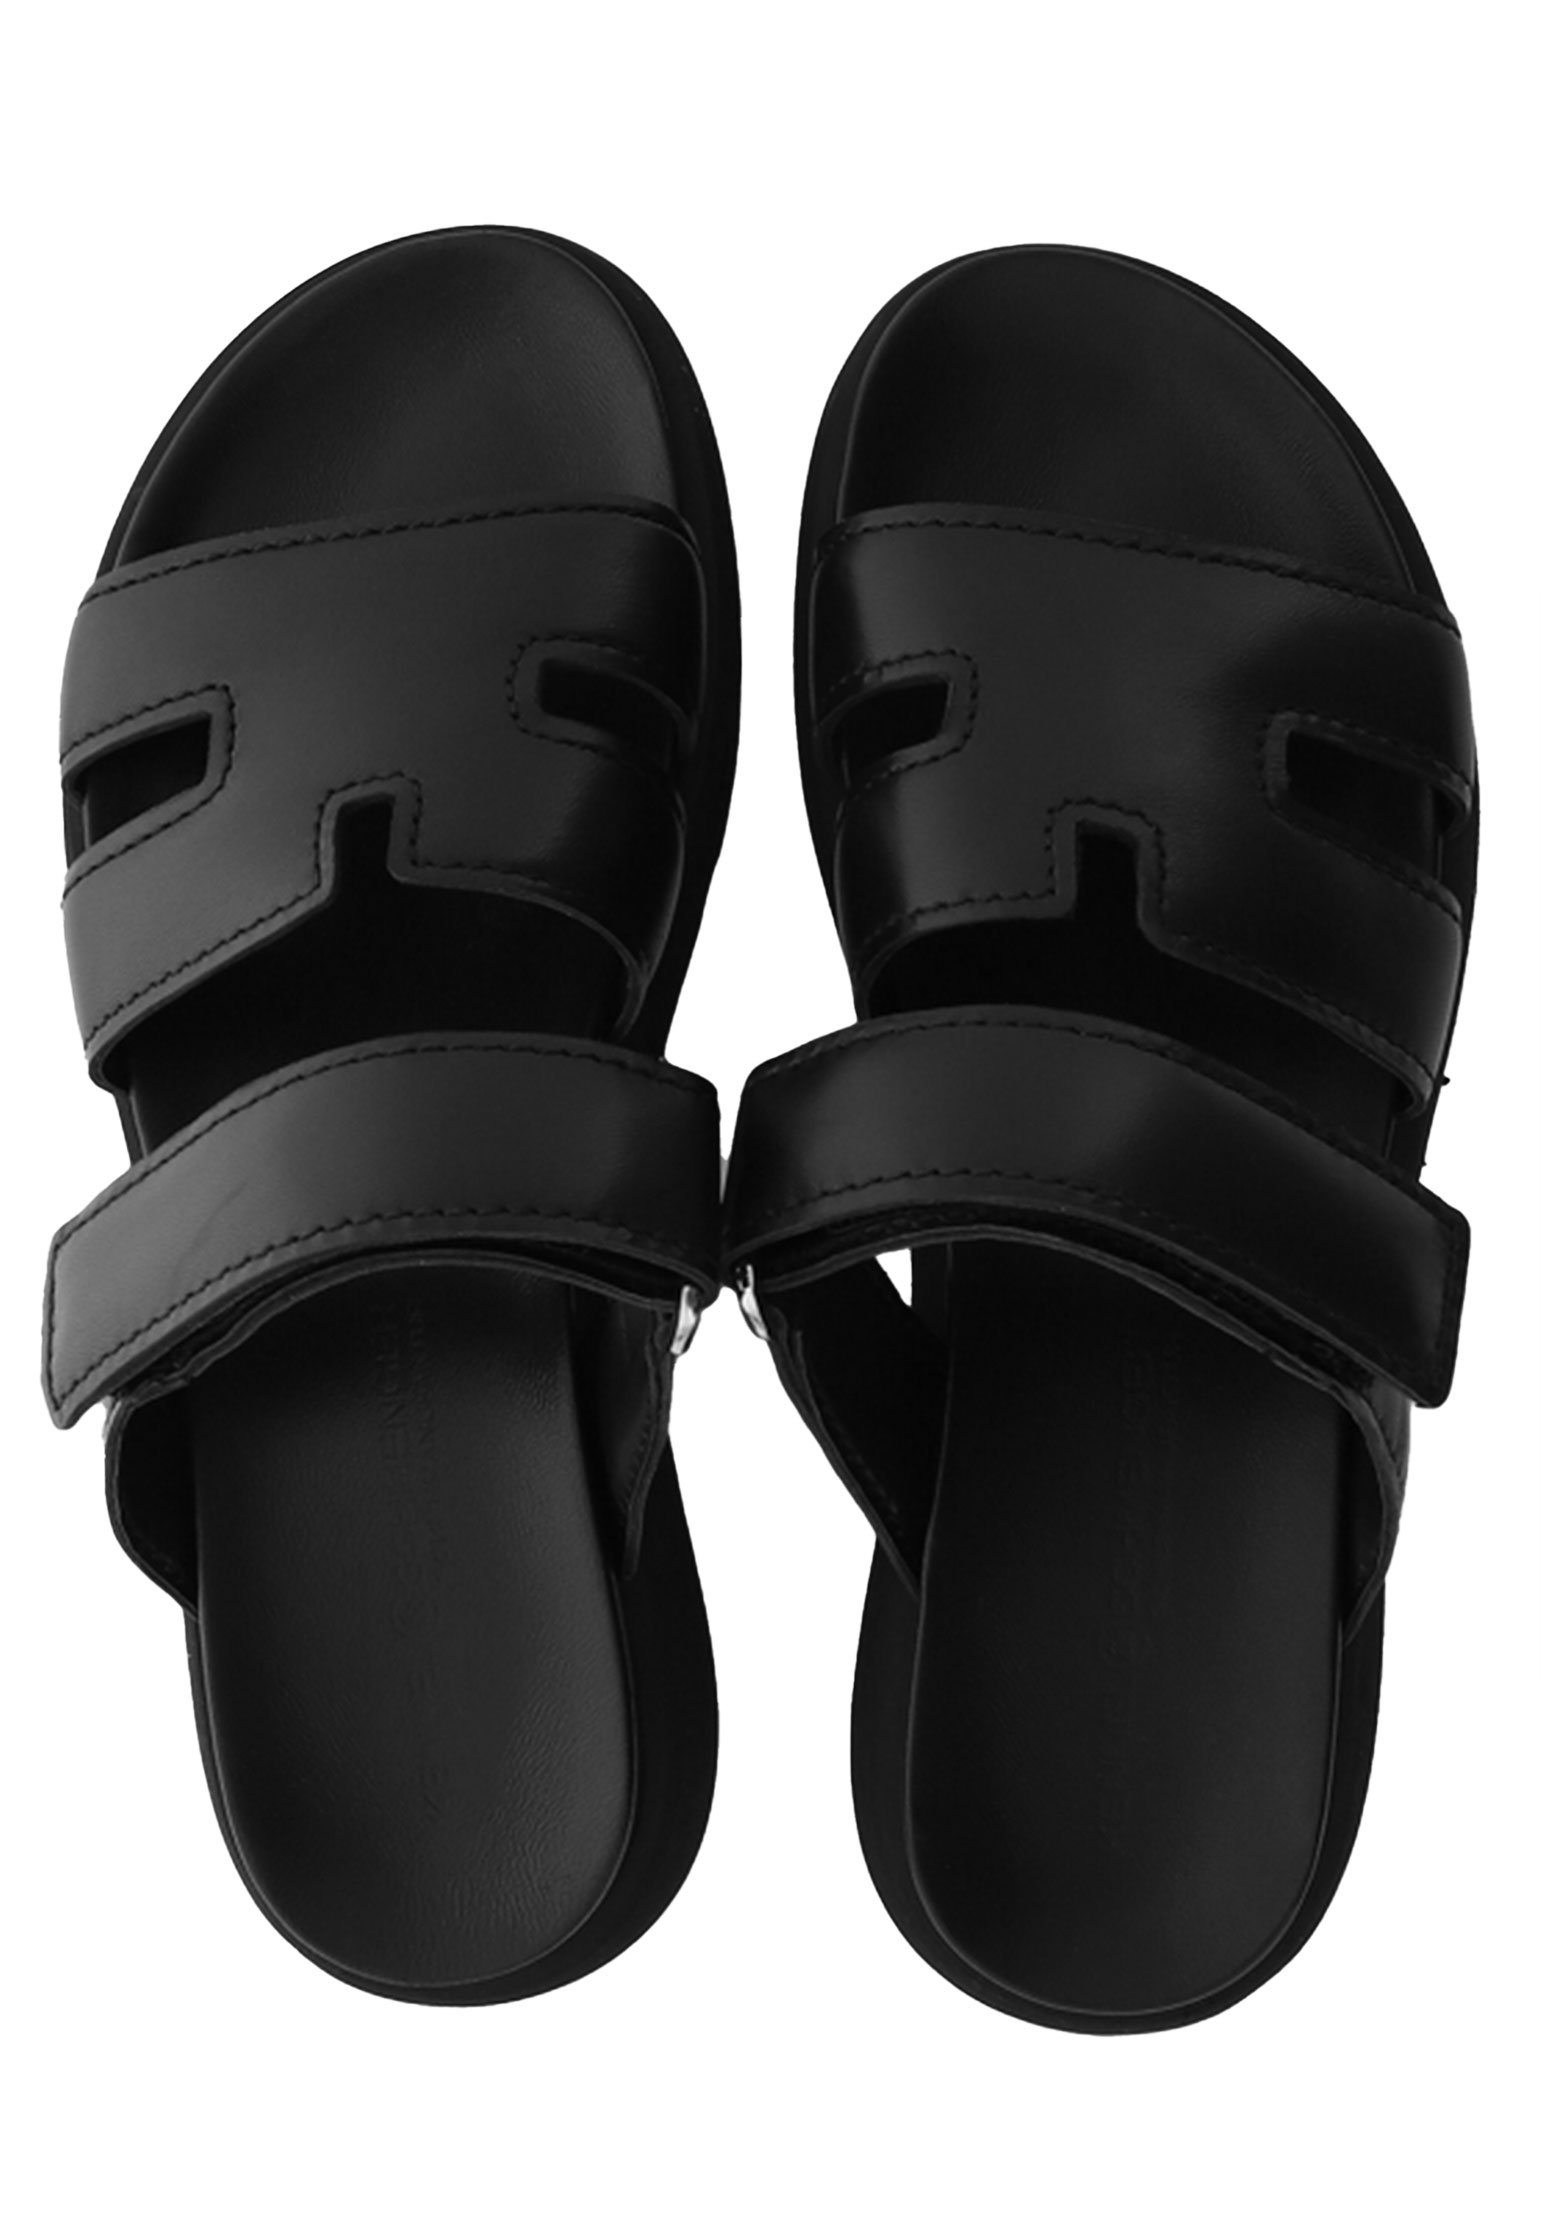 Flat shoes KENNEL&SCHMENGER Color: black (Code: 4162) in online store Allure